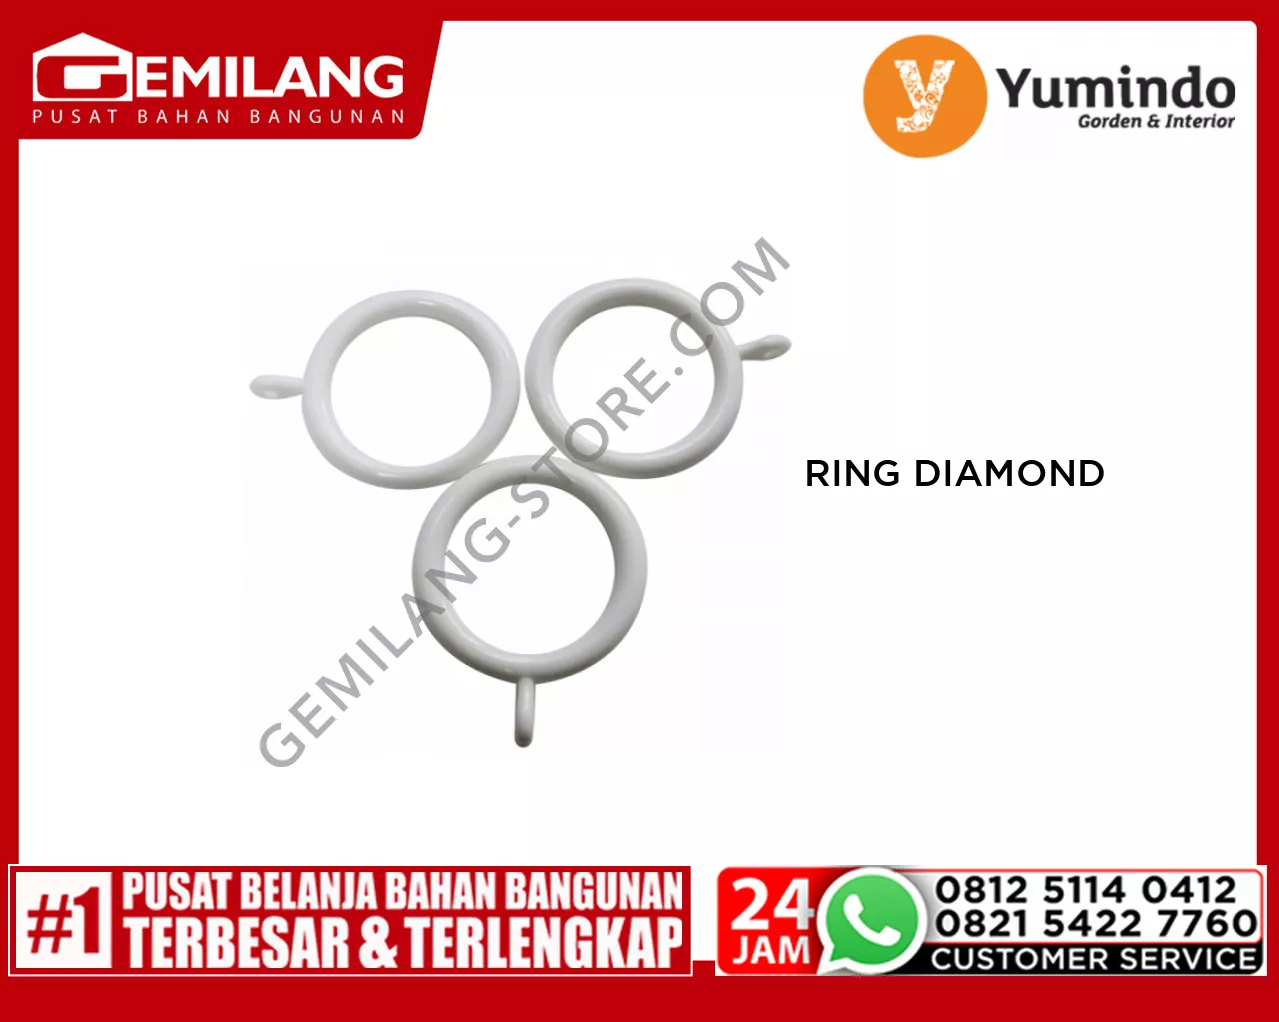 YUMINDO RING DIAMOND